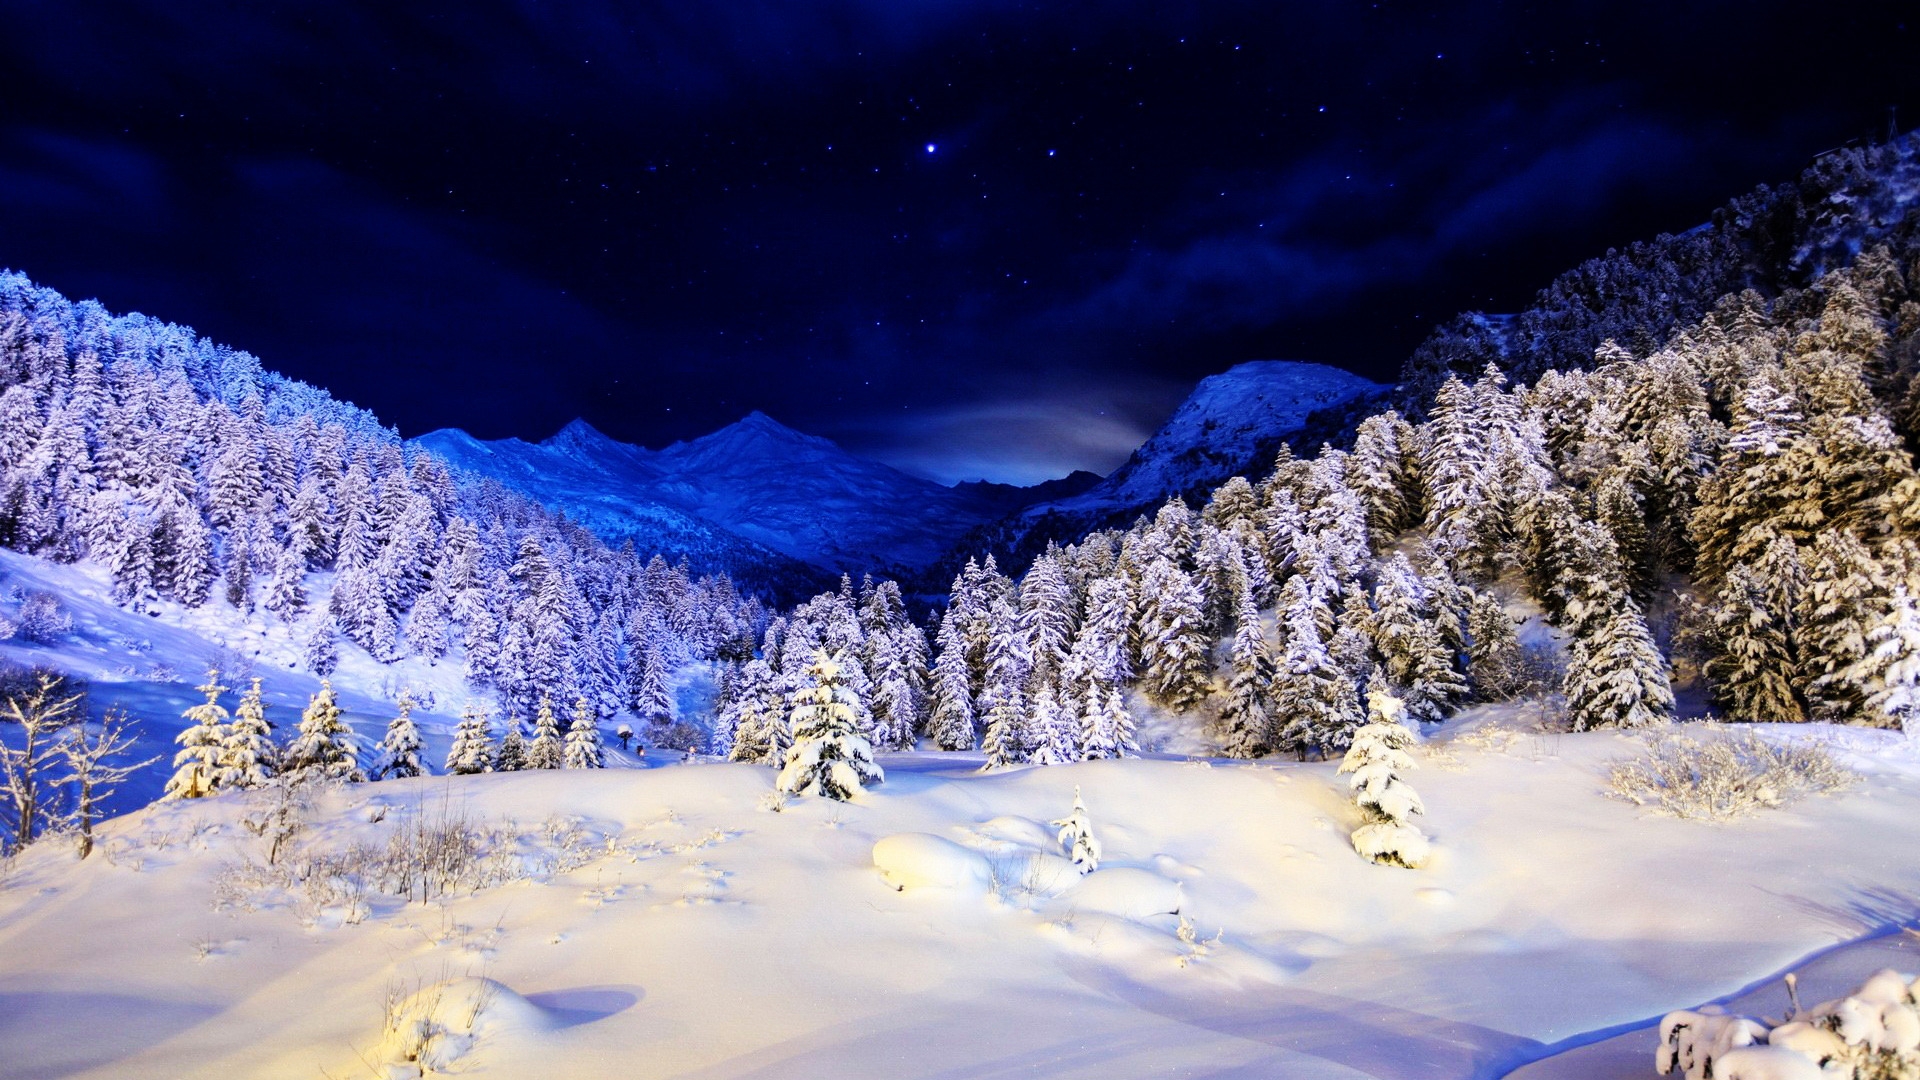 Blue Winter Night for 1920 x 1080 HDTV 1080p resolution